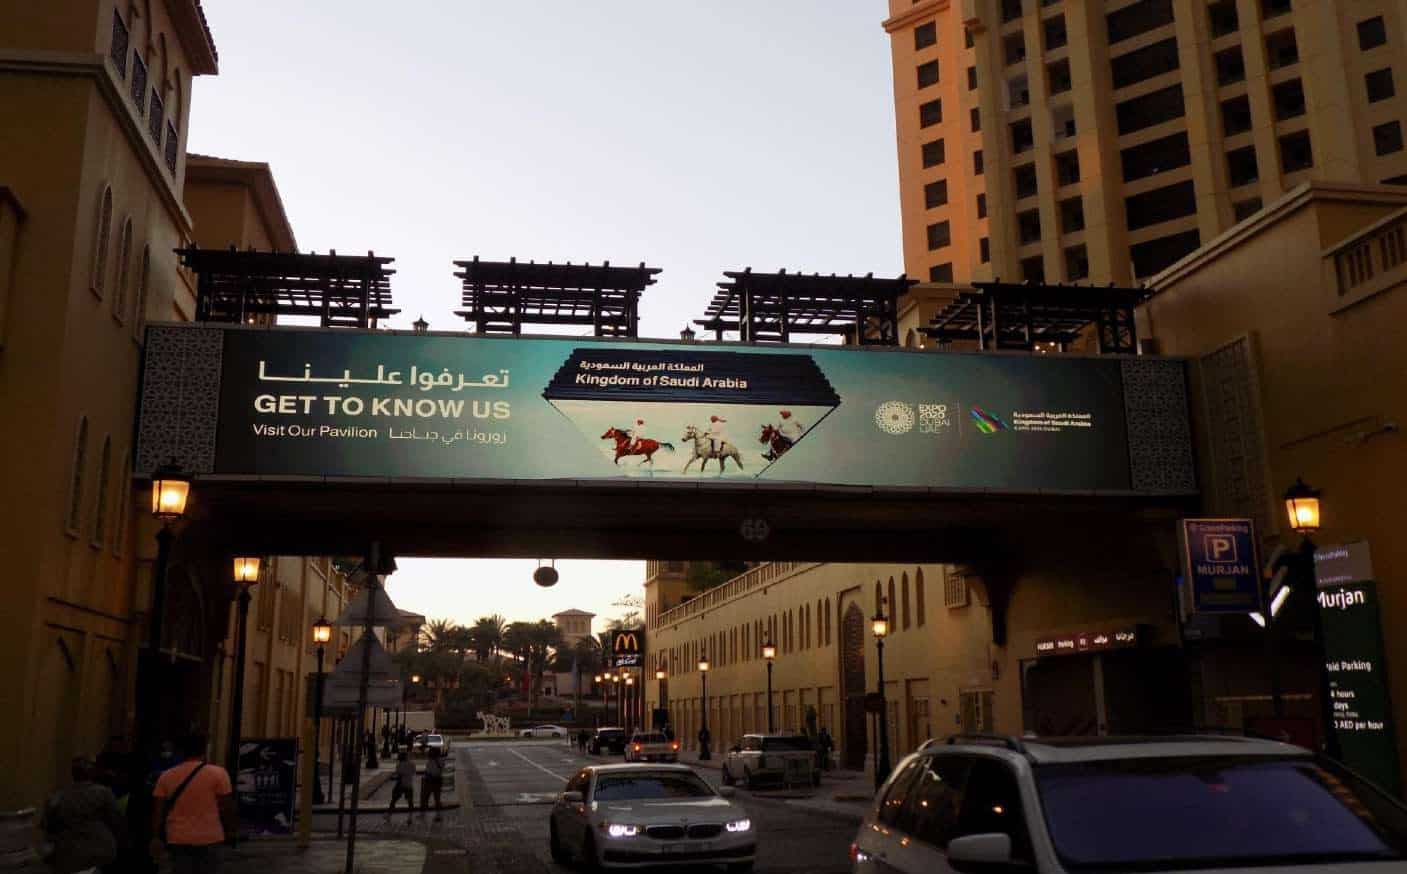 Jumeirah Beach Residence Bridge Advertising